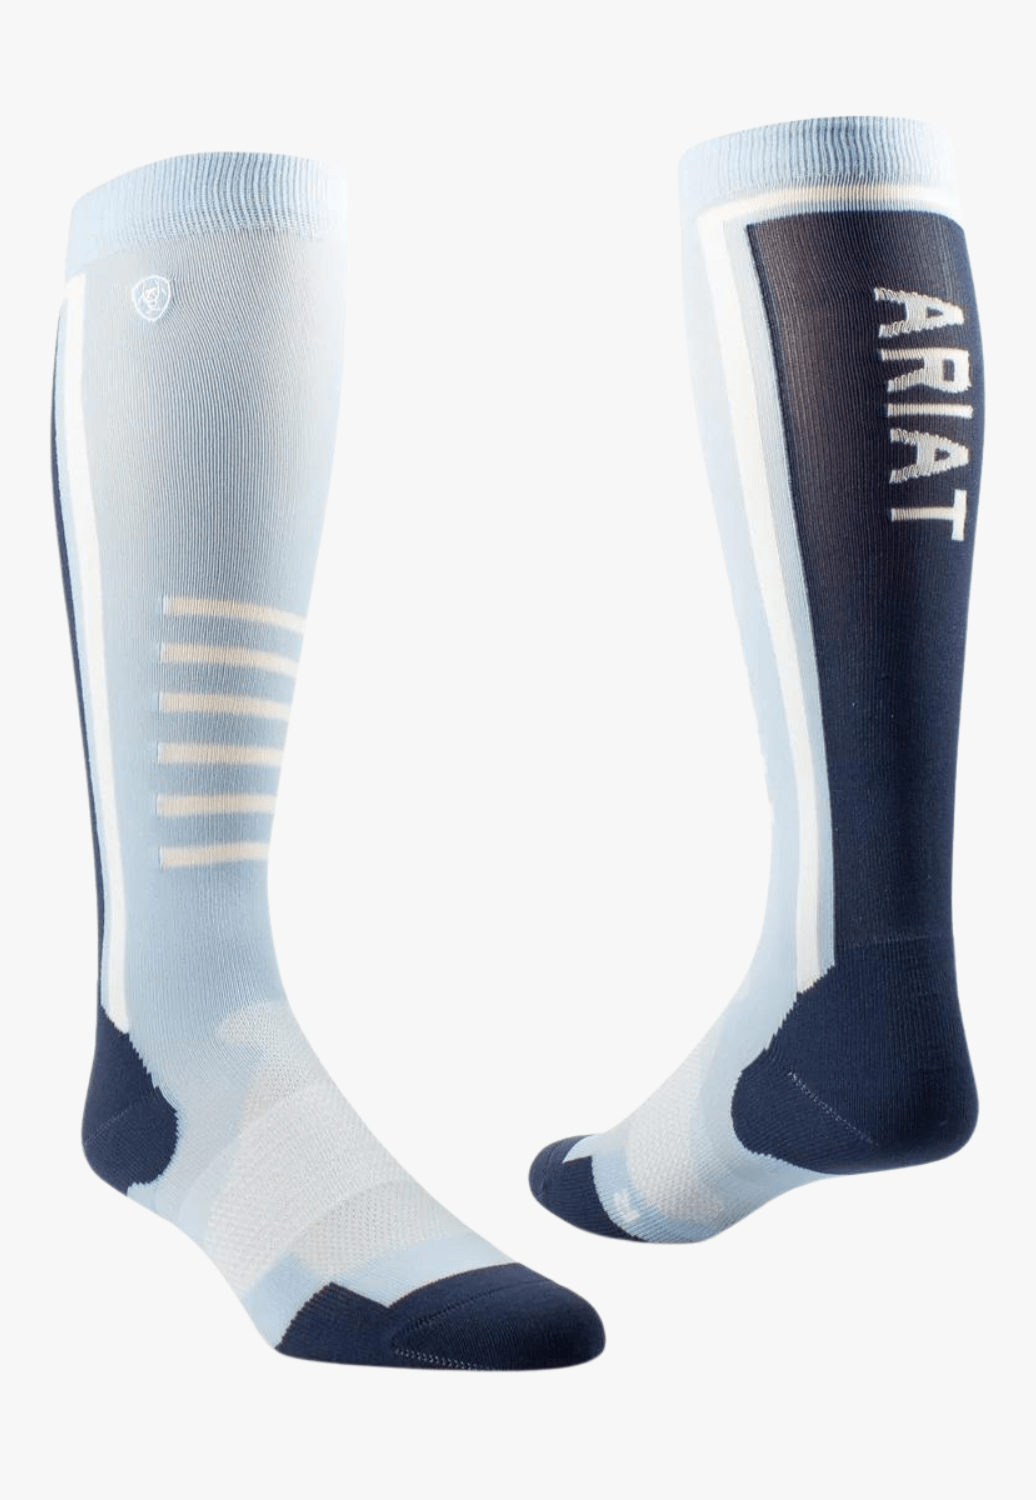 Ariat ACCESSORIES-Socks Navy/Blue/White Ariat Uni Ariattek Slimline Performance Socks